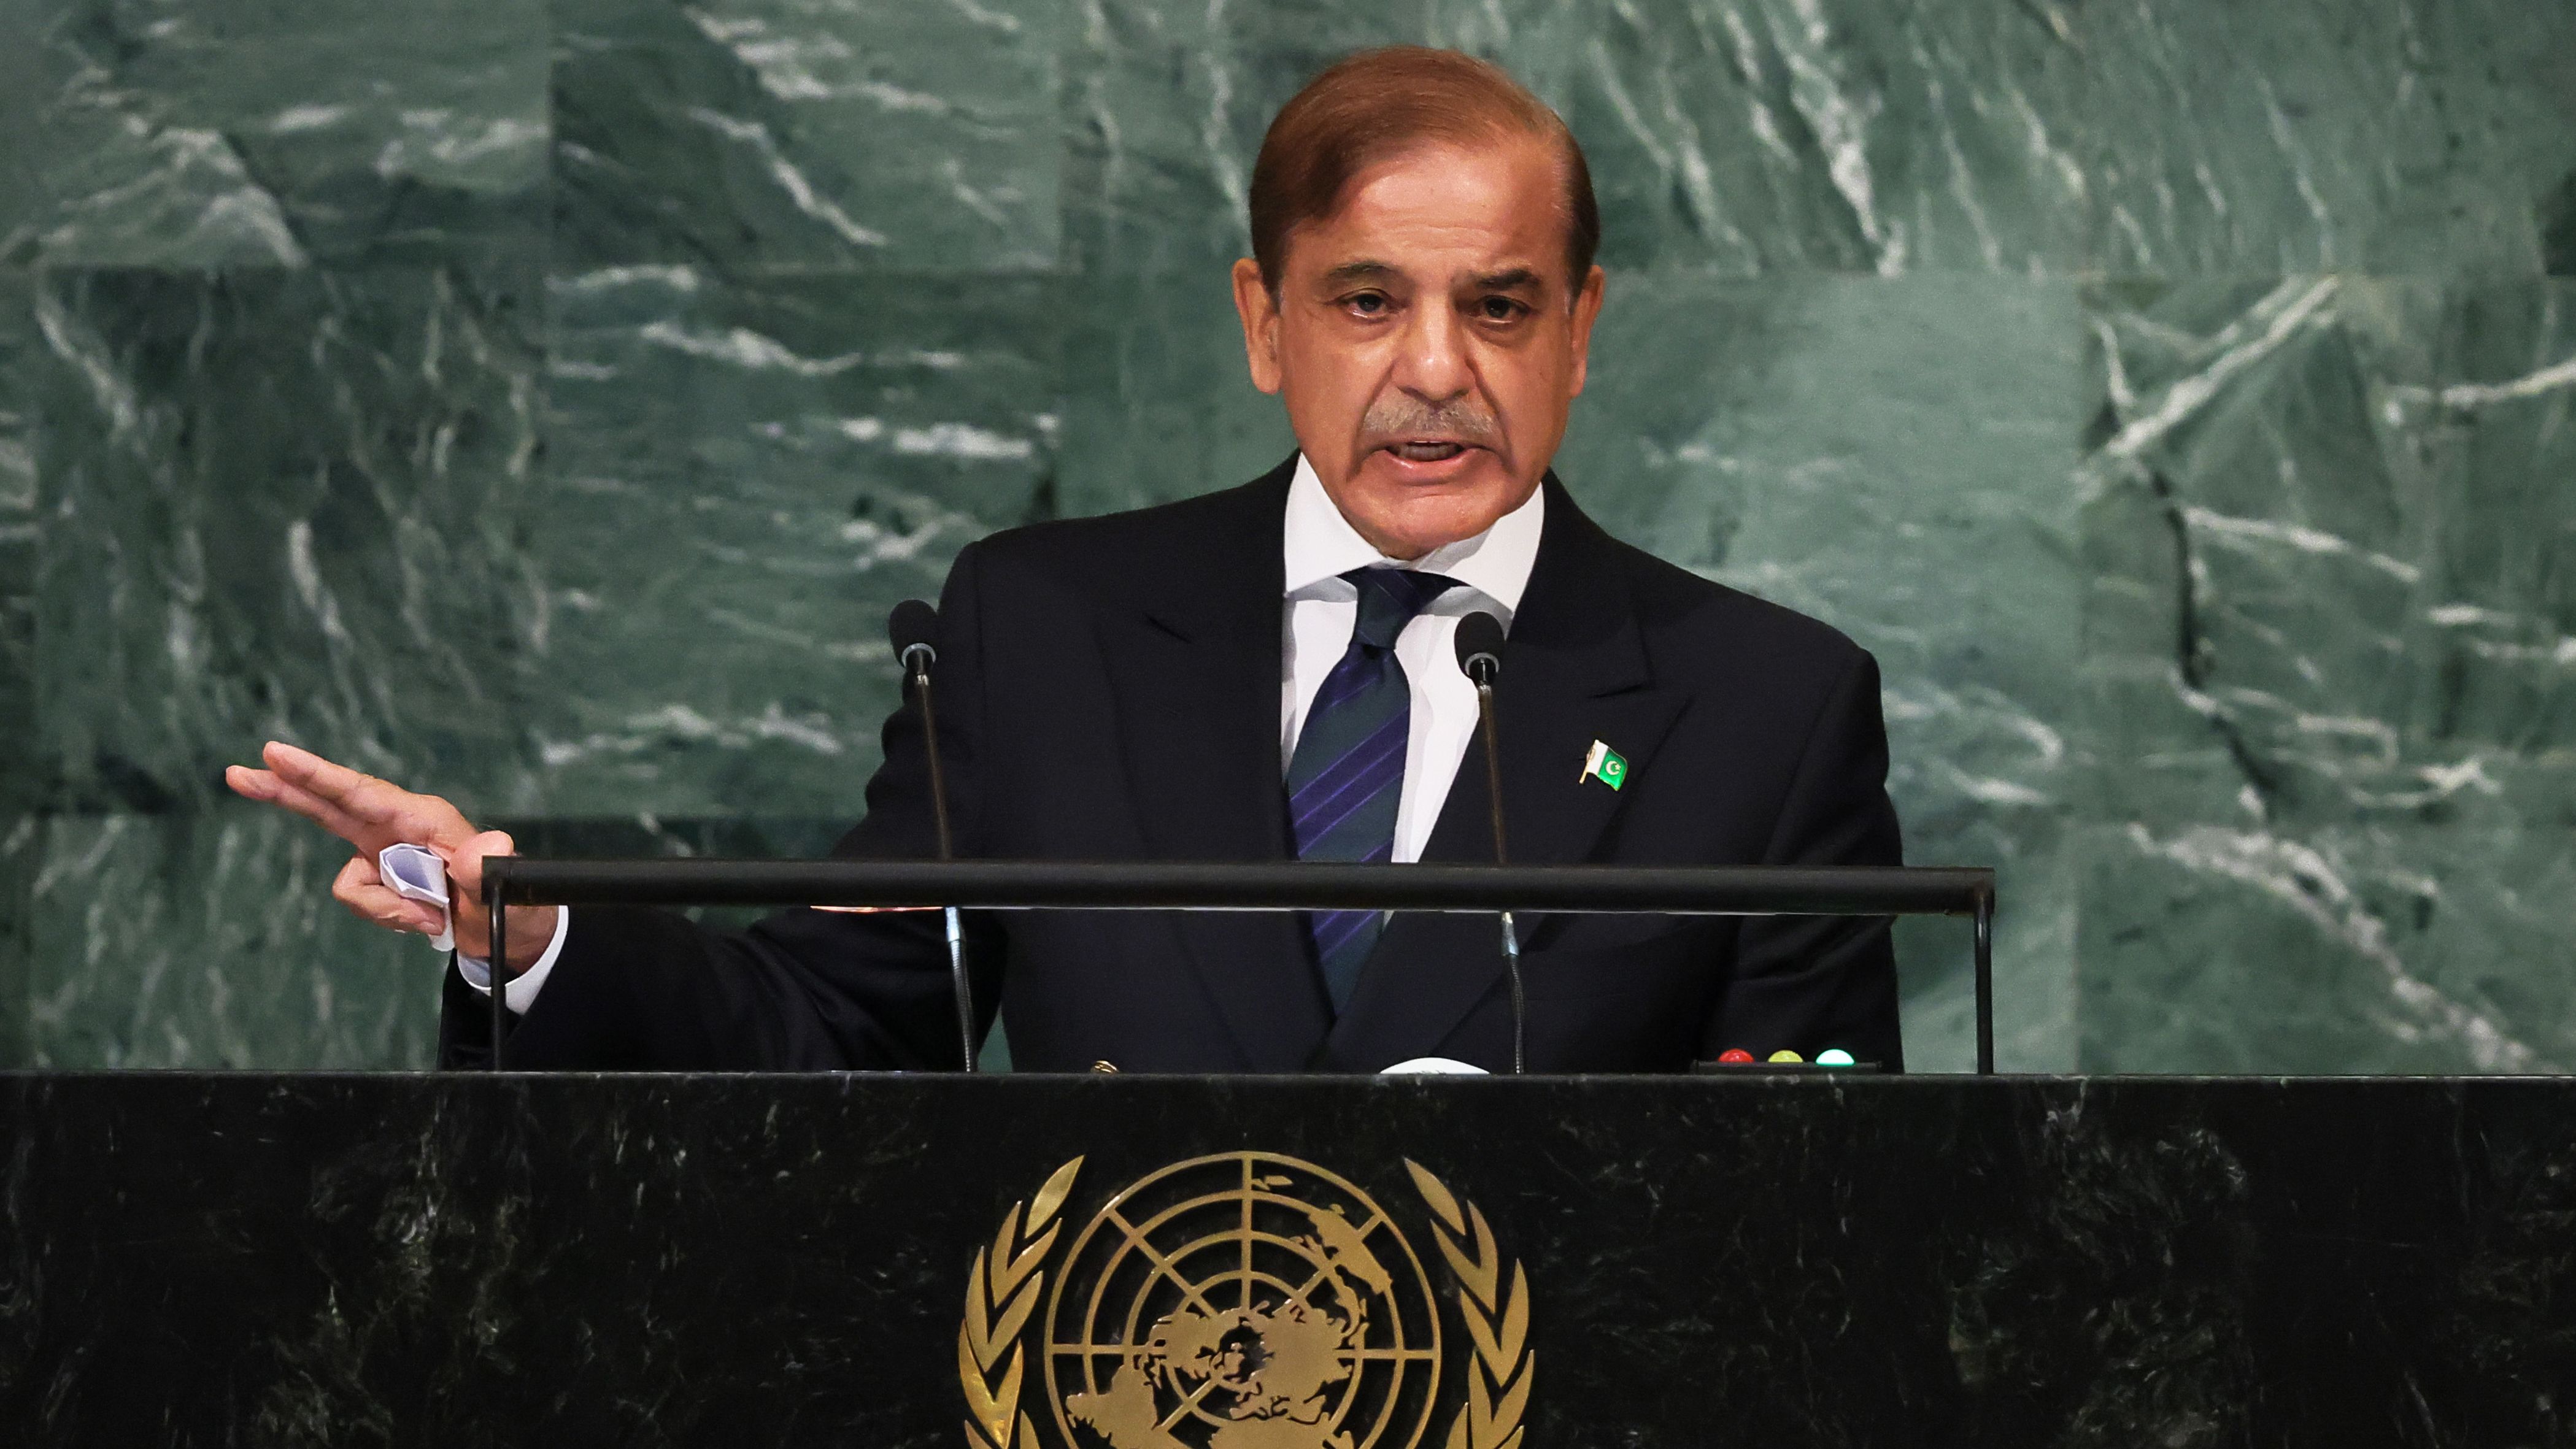 Pakistan's Prime Minister Shehbaz Sharif addresses the United Nations General Assembly on September 23, 2022.